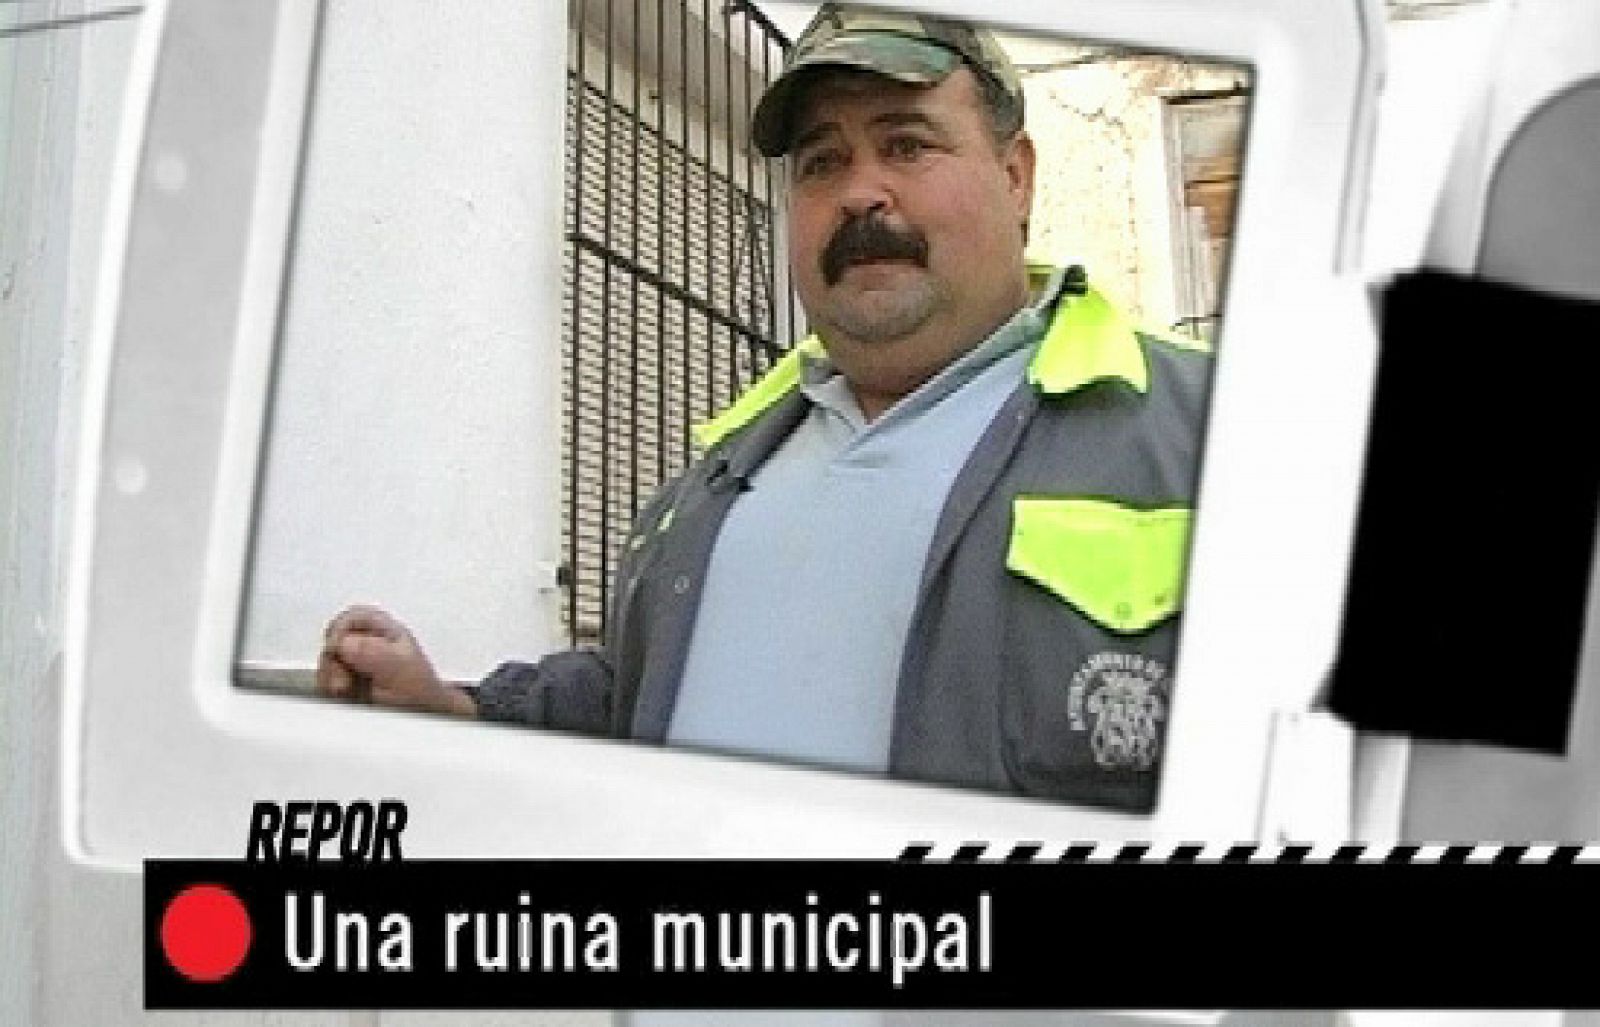 Repor: "Una ruina municipal" | RTVE Play